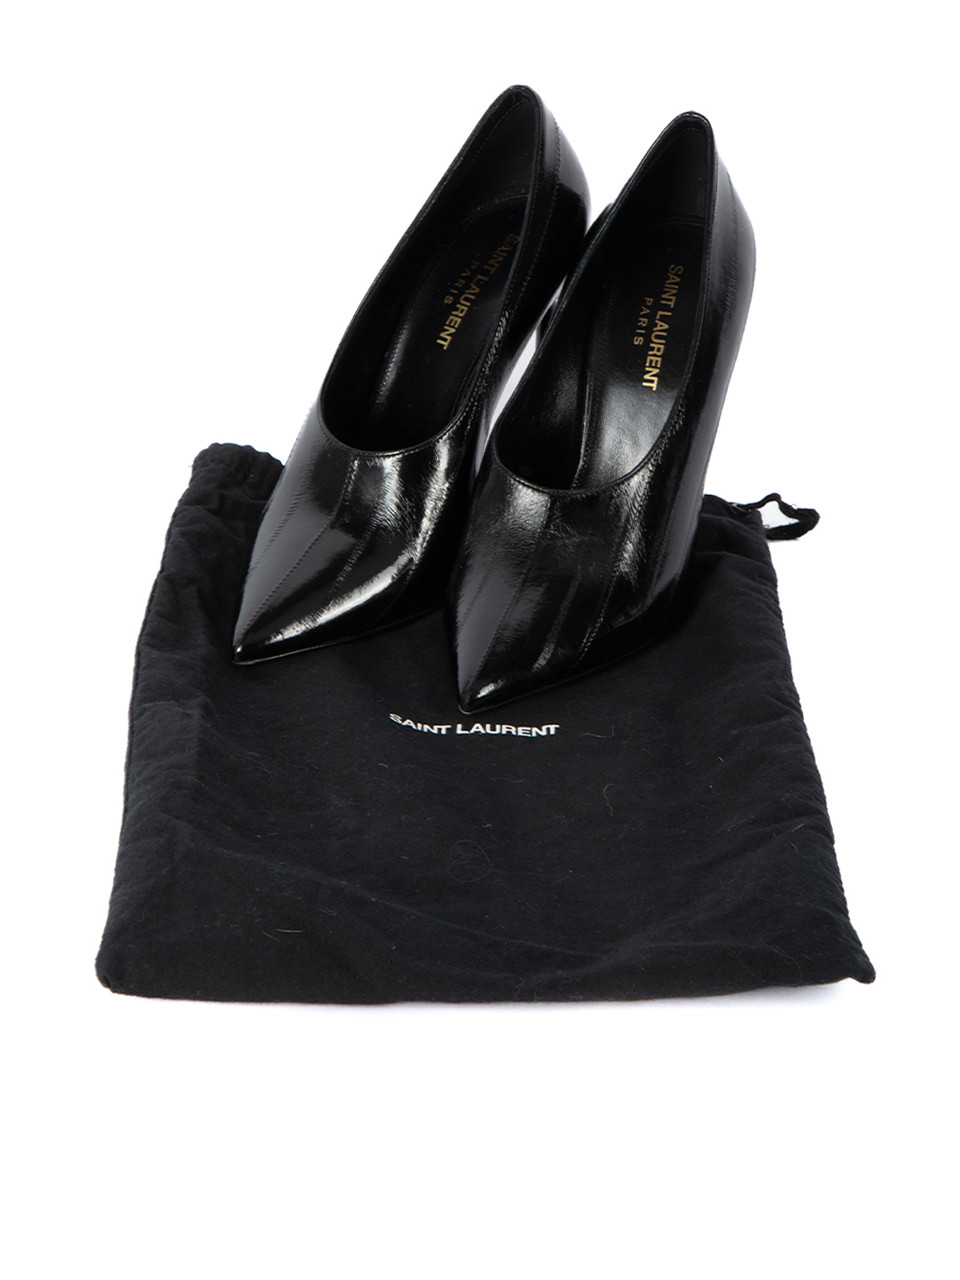 Saint Laurent Black Eel Leather Knife Heels